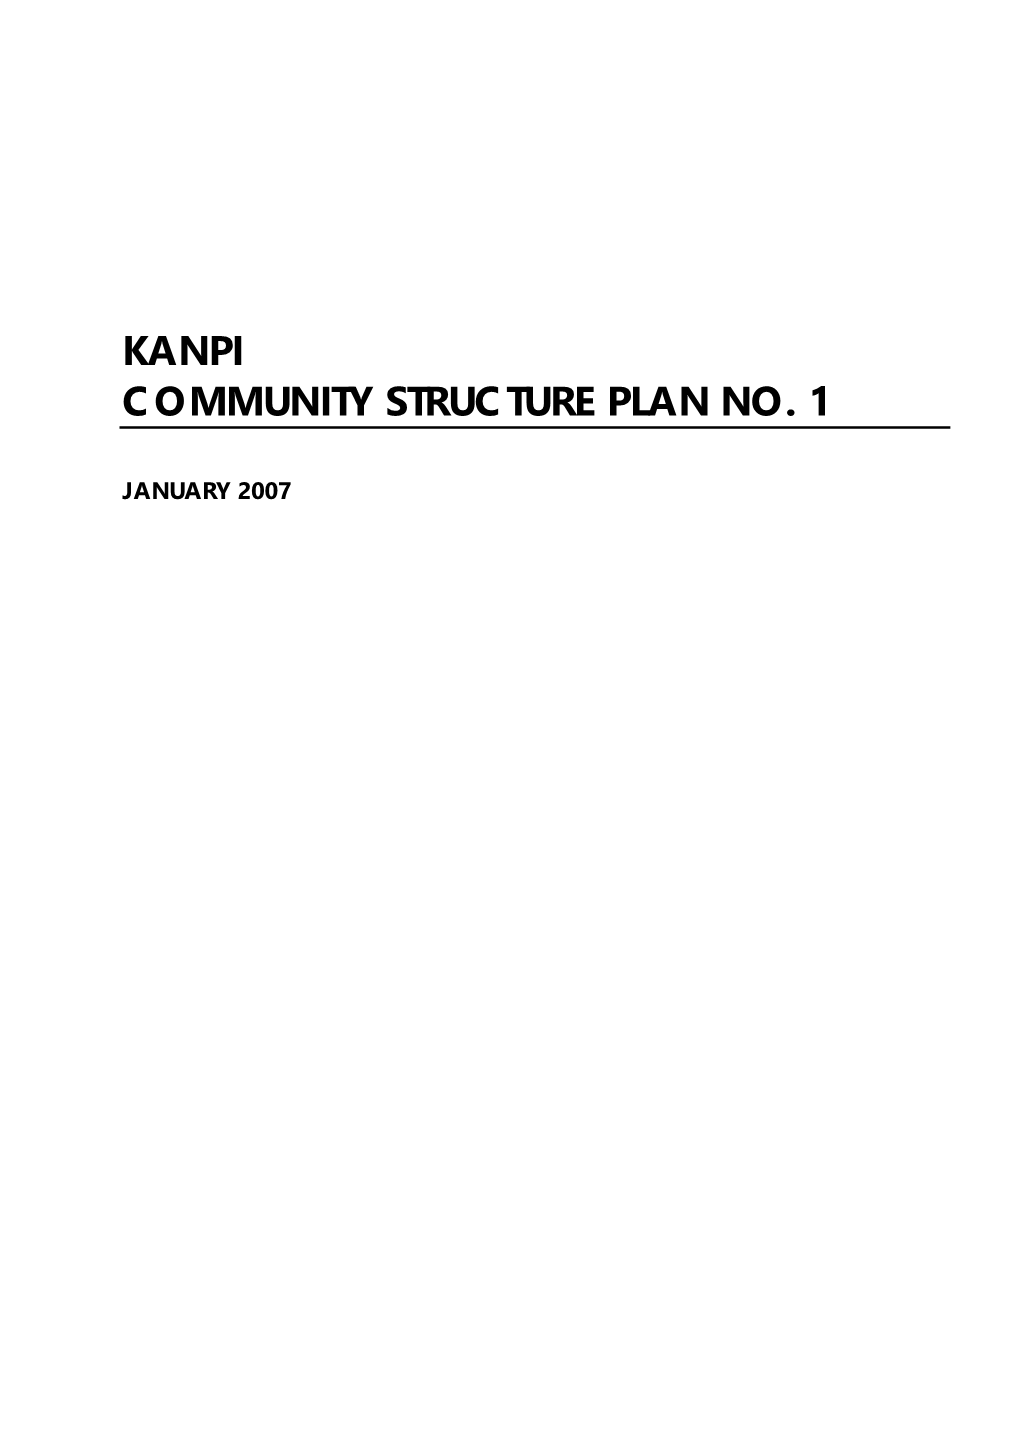 Kanpi Community Structure Plan No. 1